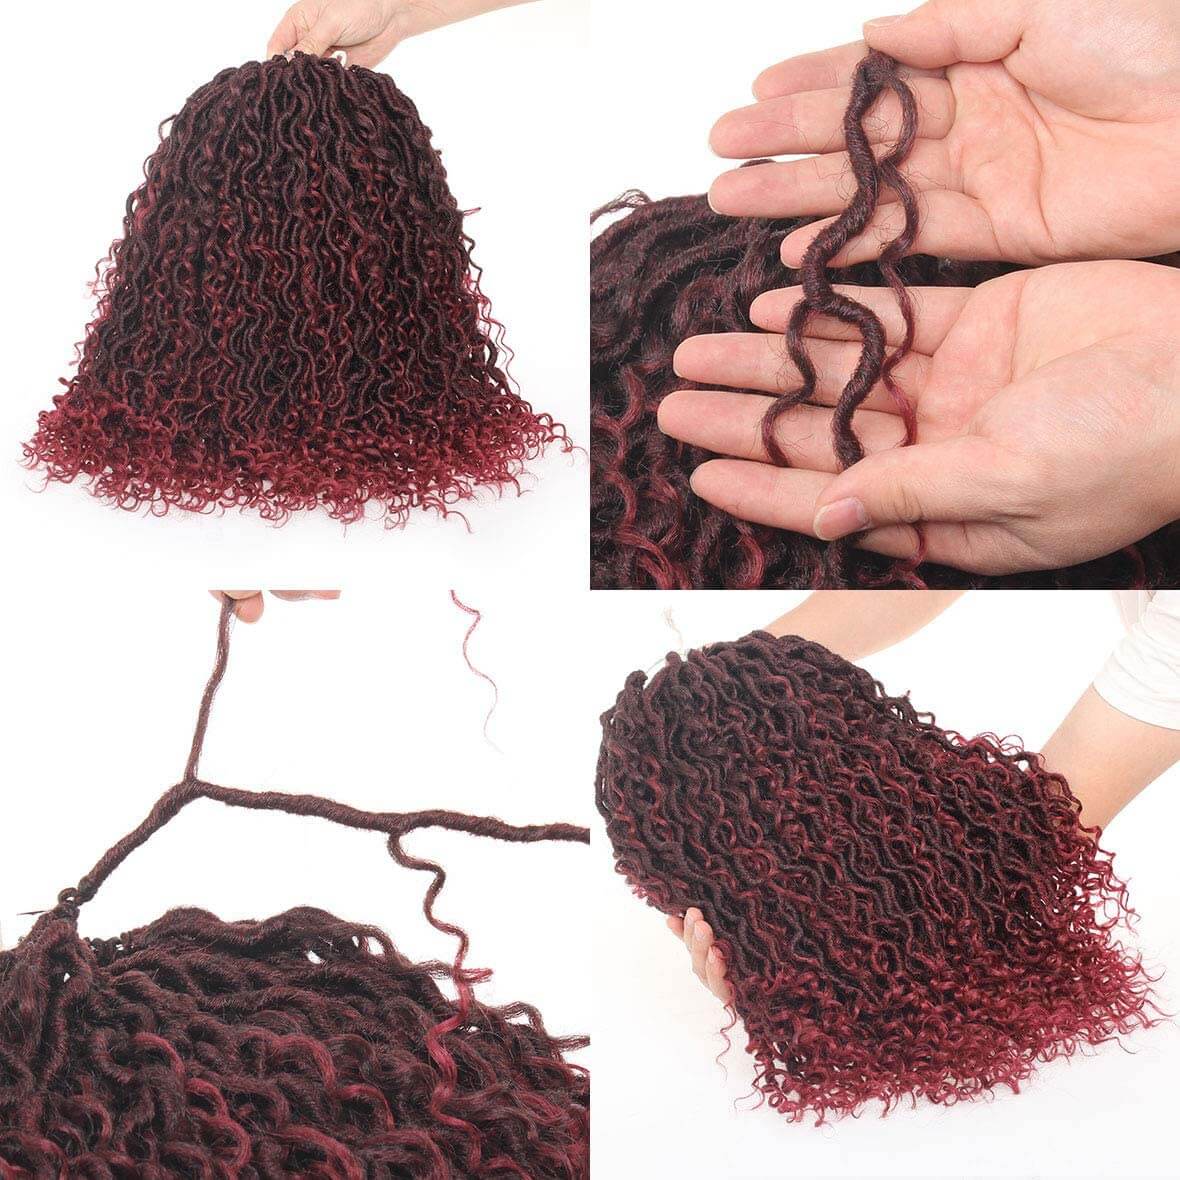 Xtrend 18inch Boho Faux Locs Crochet Hair Pre-Looped Bohemian Goddess Locs Hair Wavy Crochet Braids With Curly Hair 16Strands/pack